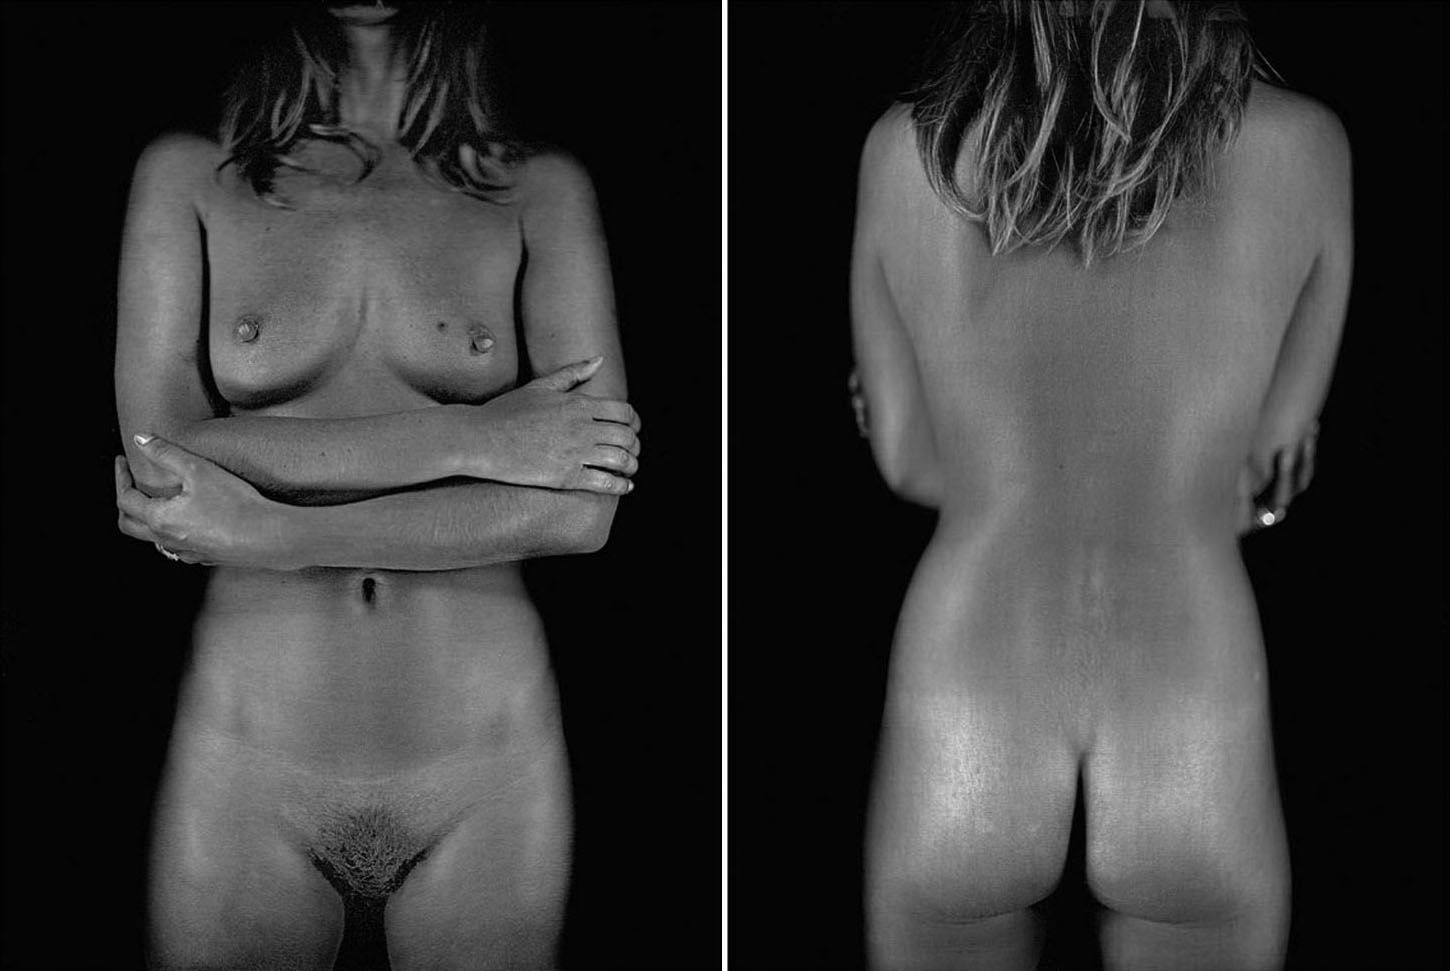 Moss nude pics kate Kate Moss